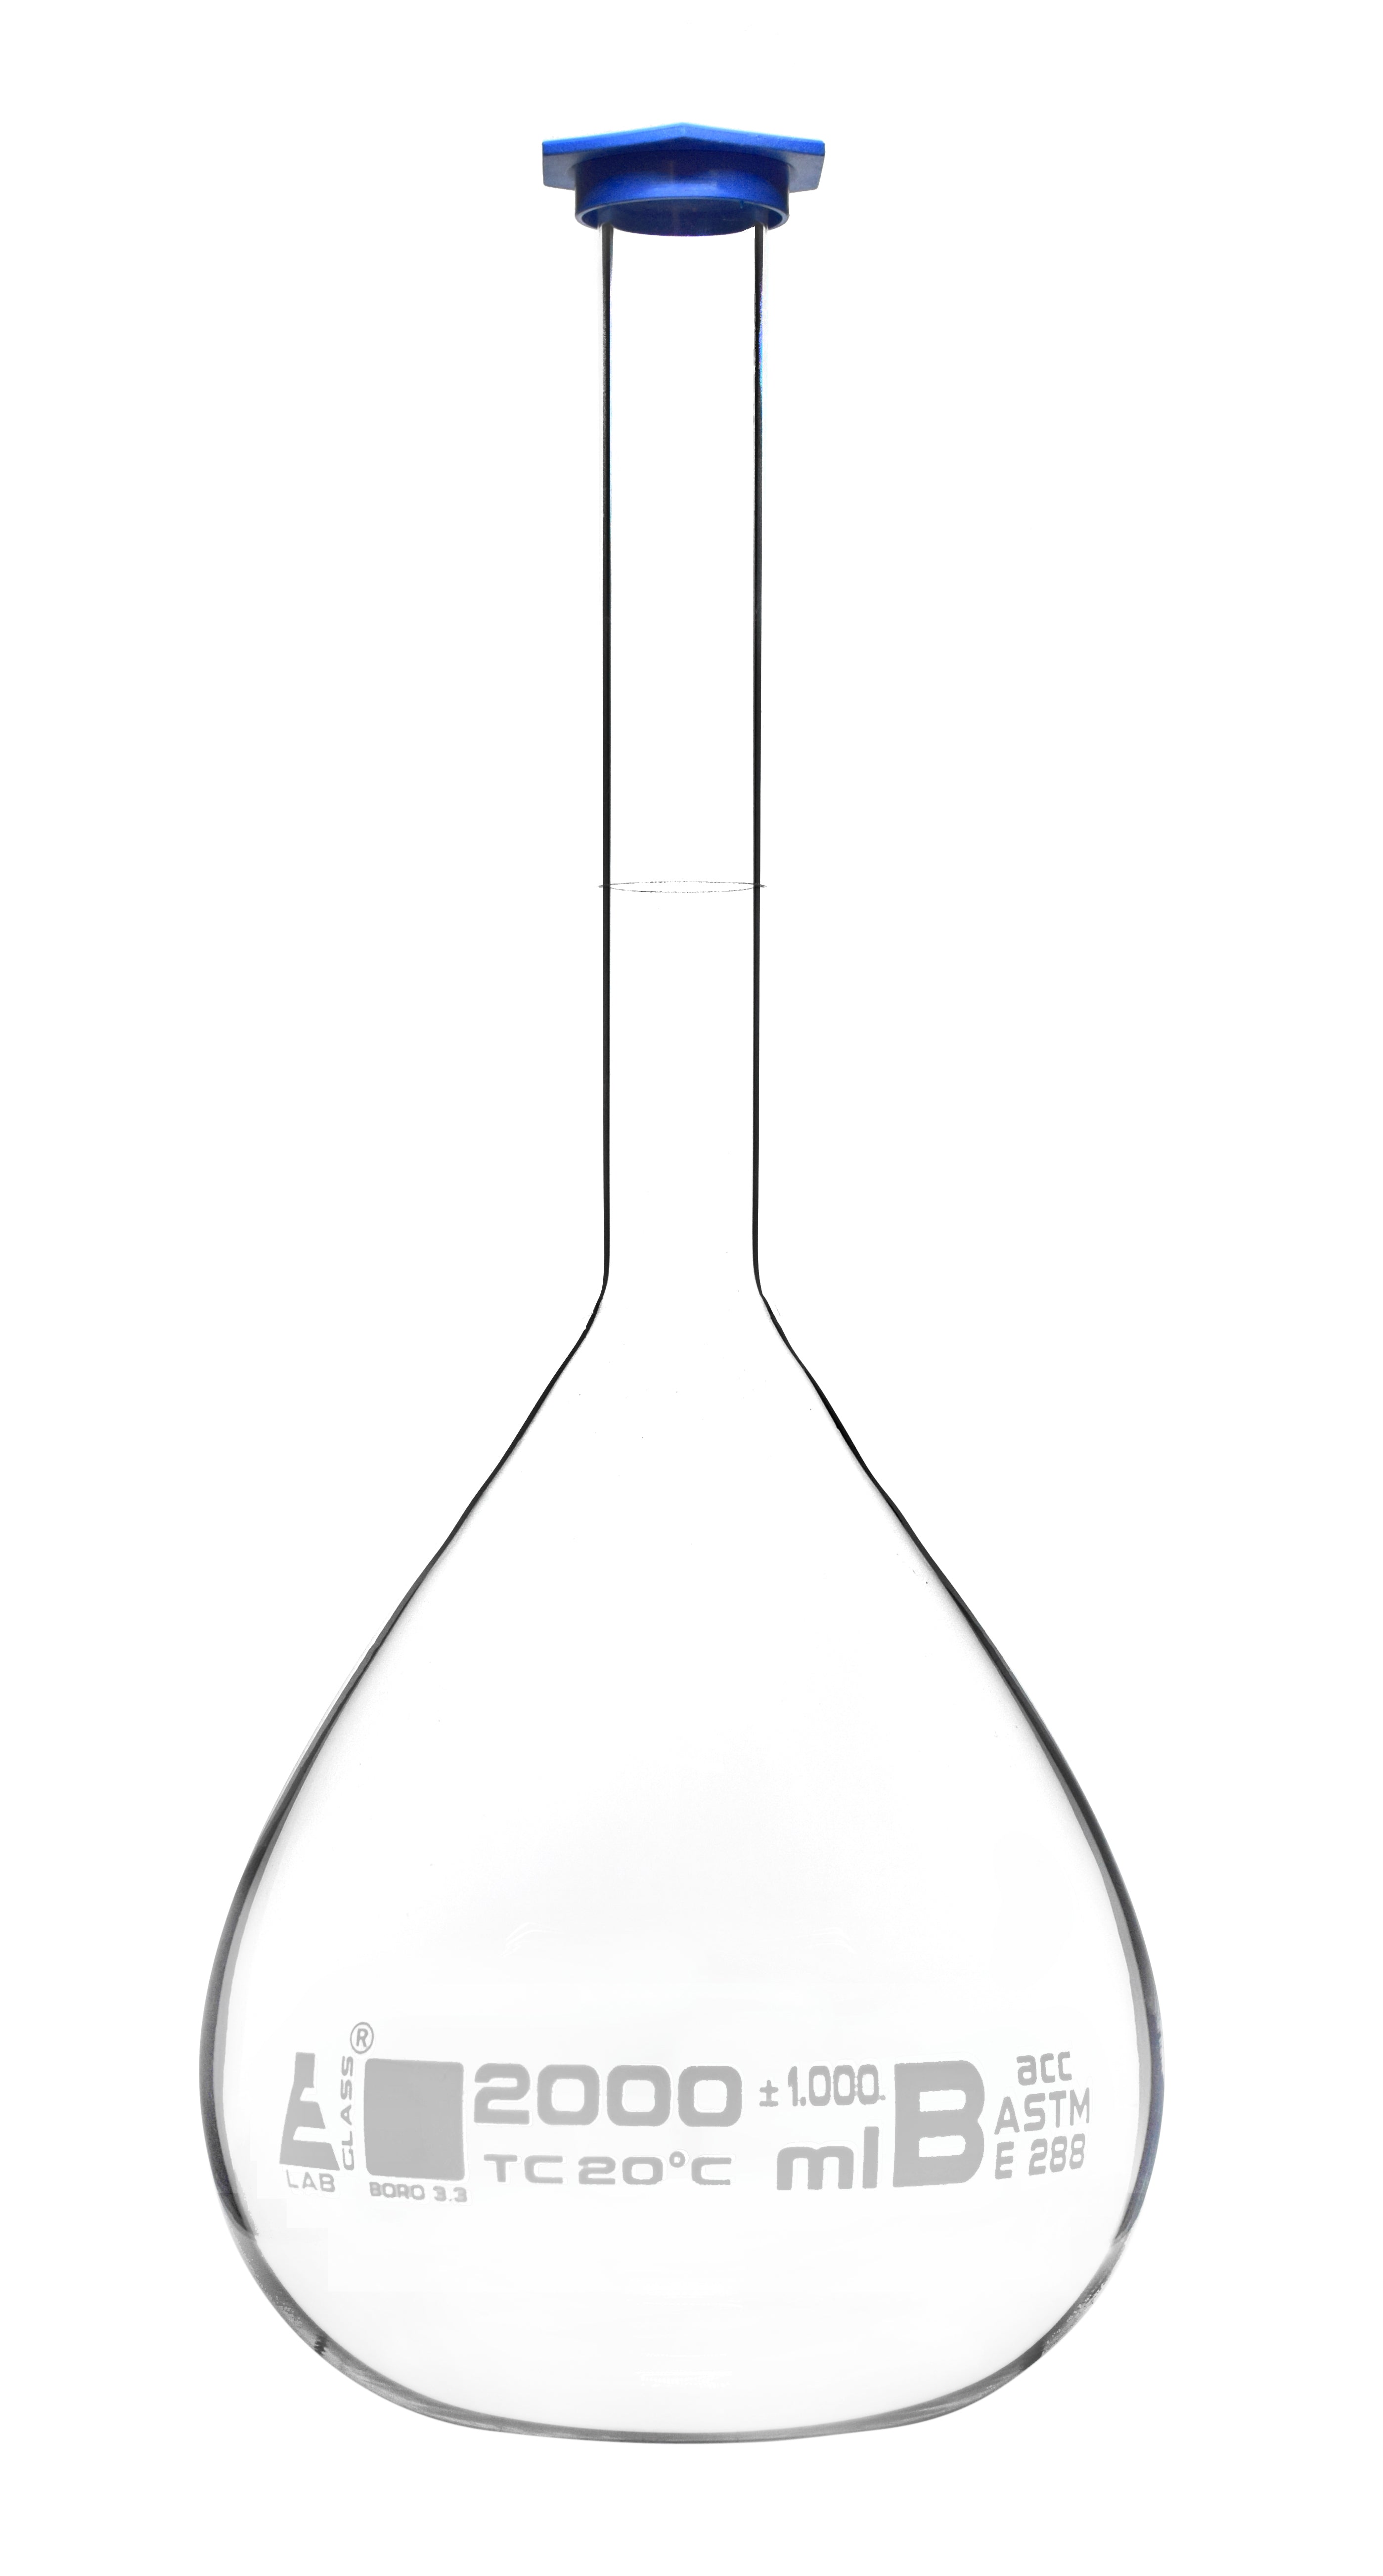 Borosilicate Volumetric Flask with Polyethylene Snap Cap, 2000 ml, Class B, White Print, ASTM, Autoclavable